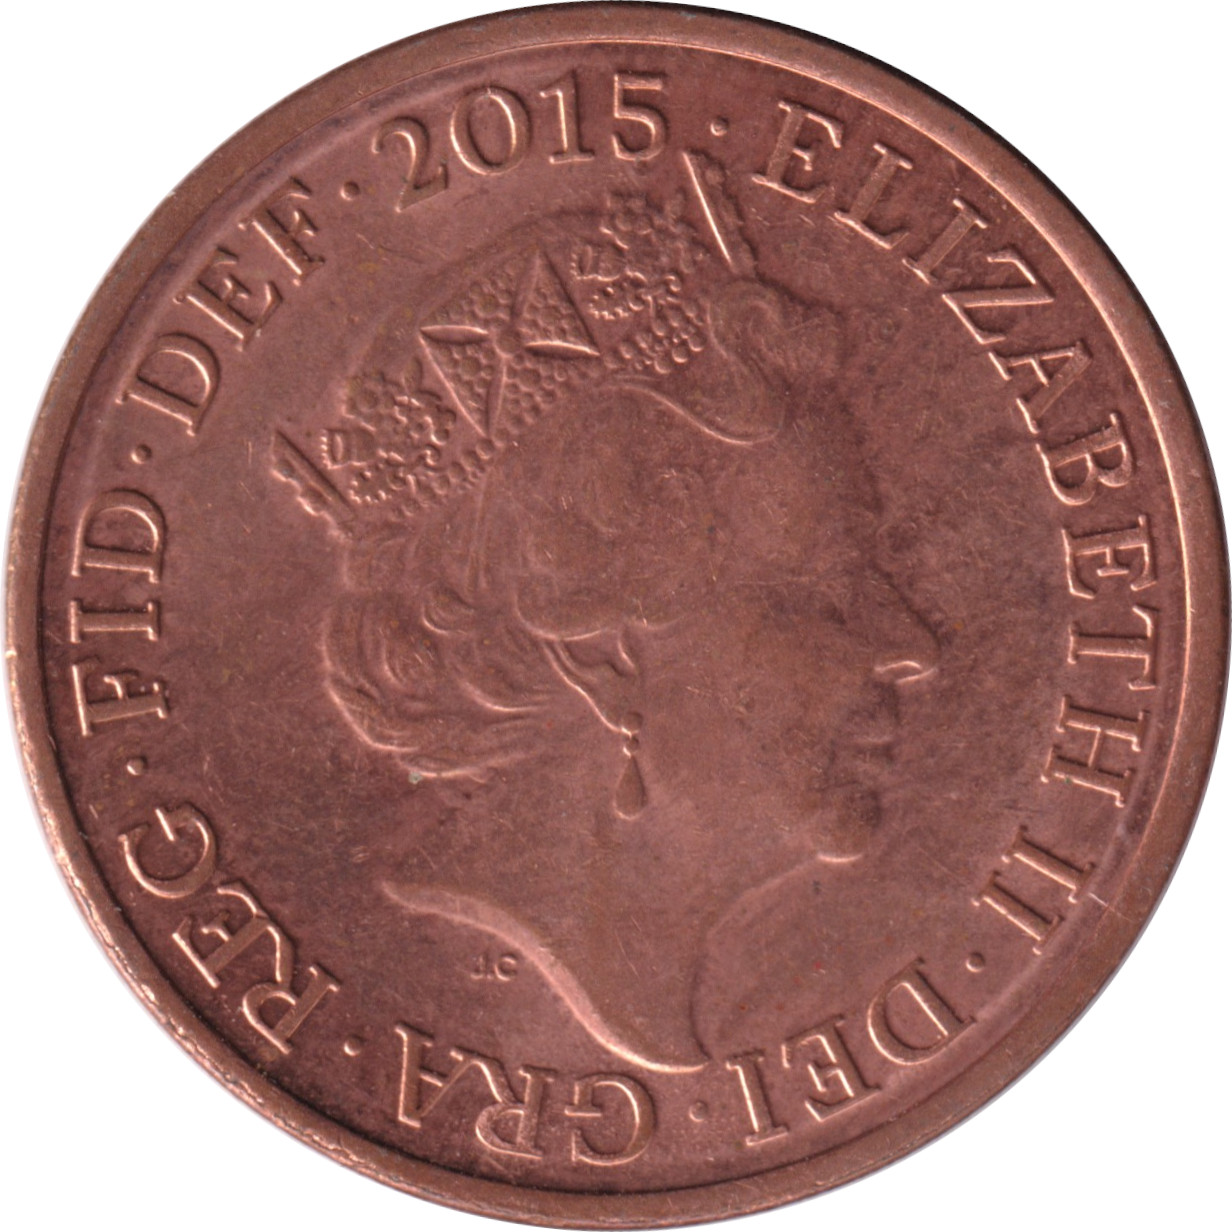 2 pence - Elizabeth II - Tête historique